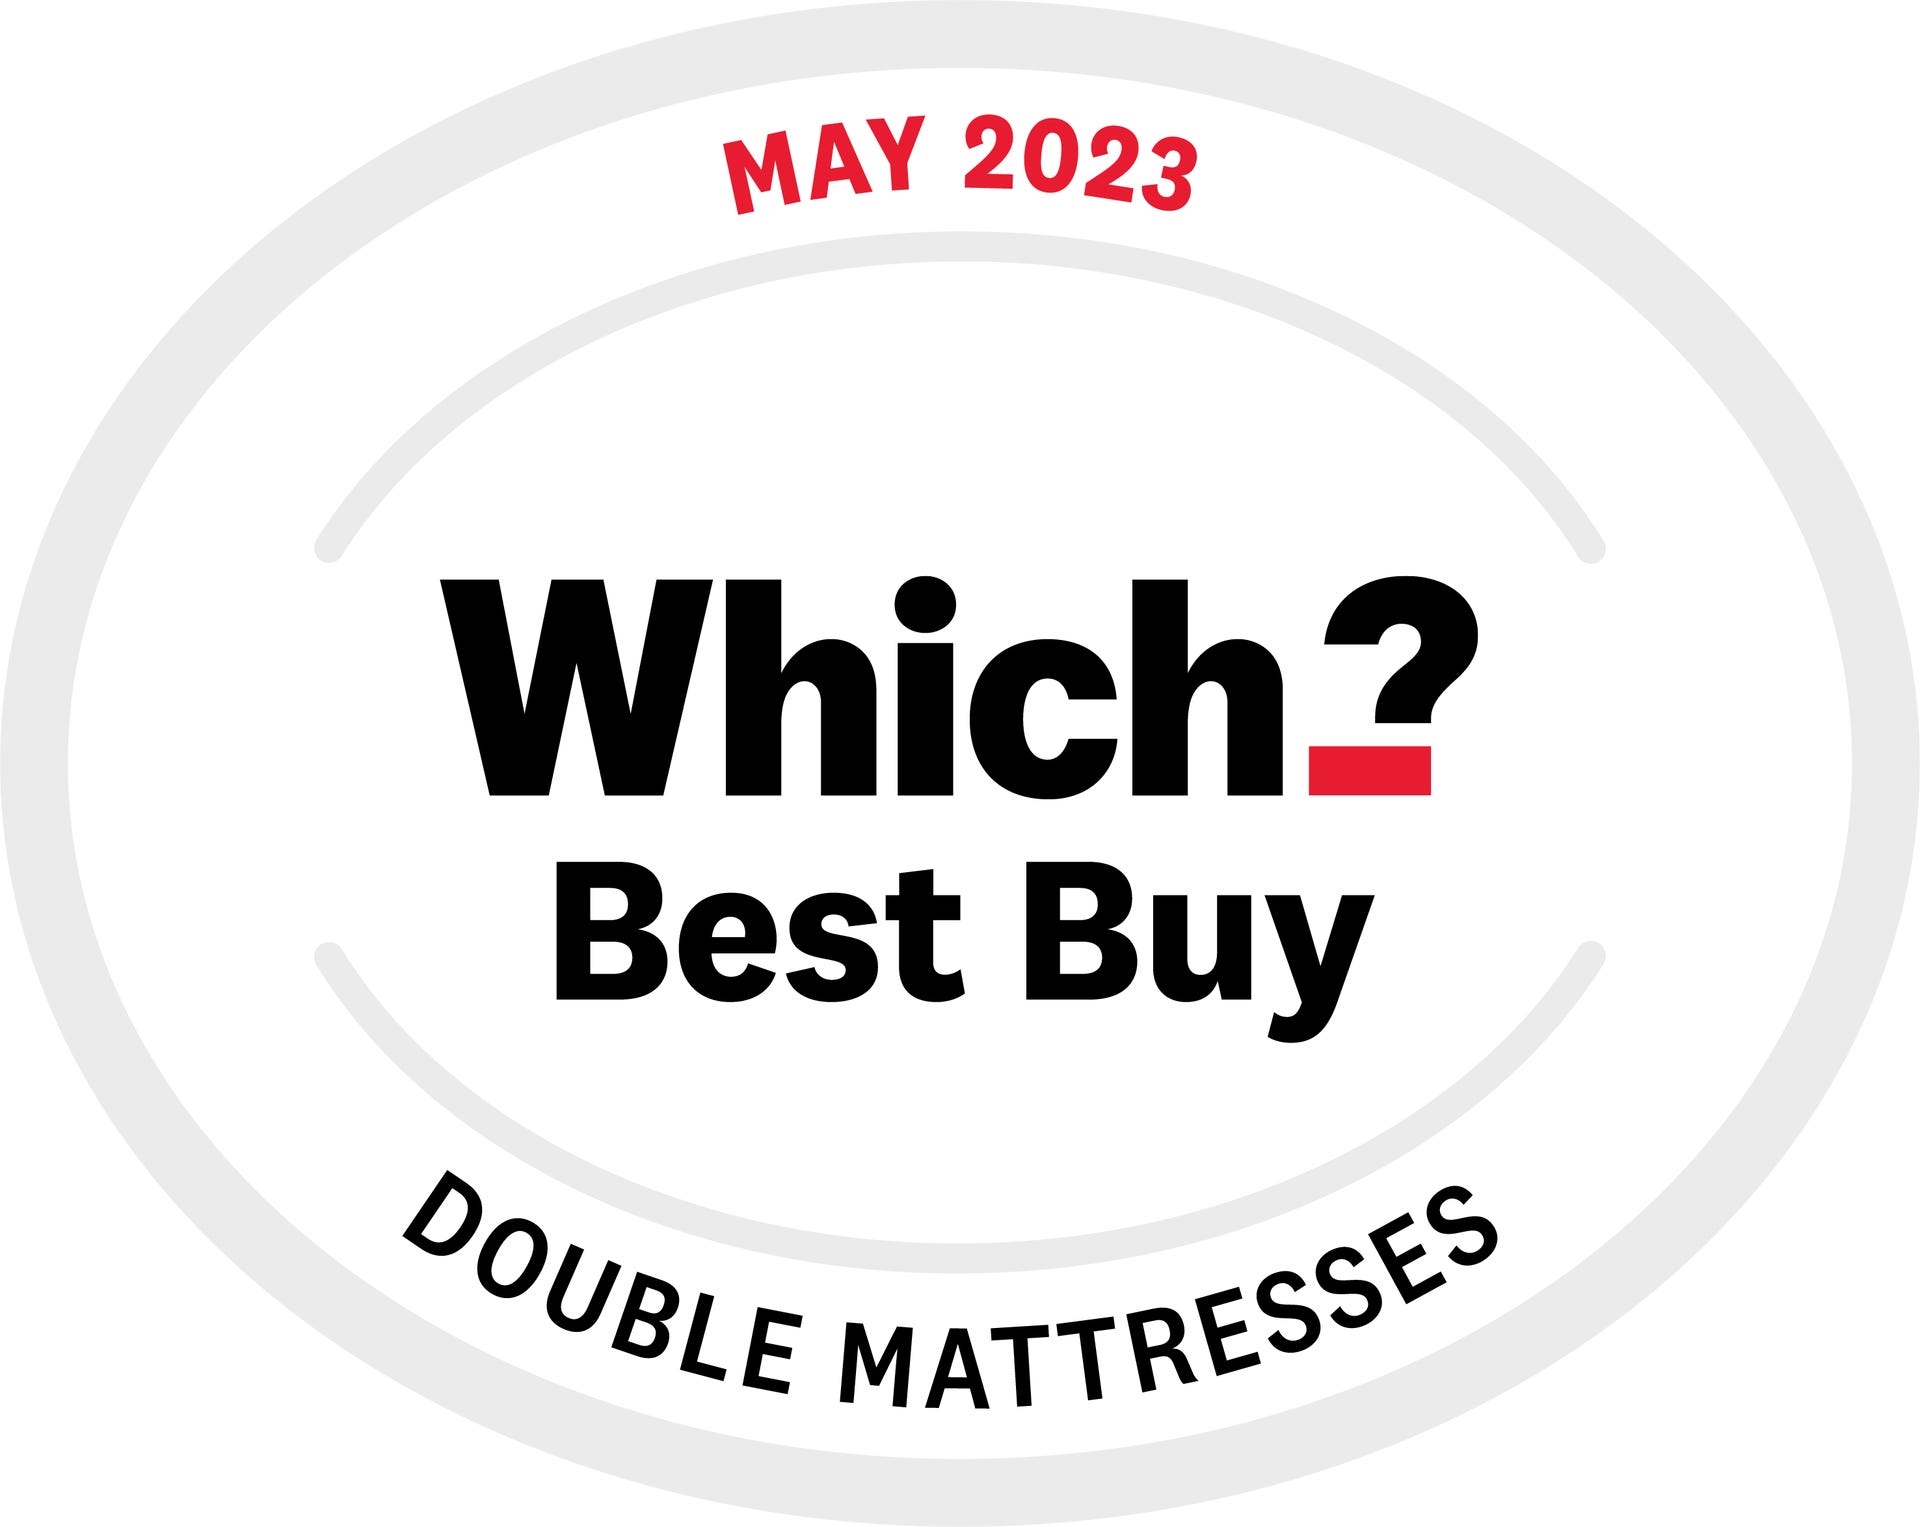 emma nextgen premium mattress review